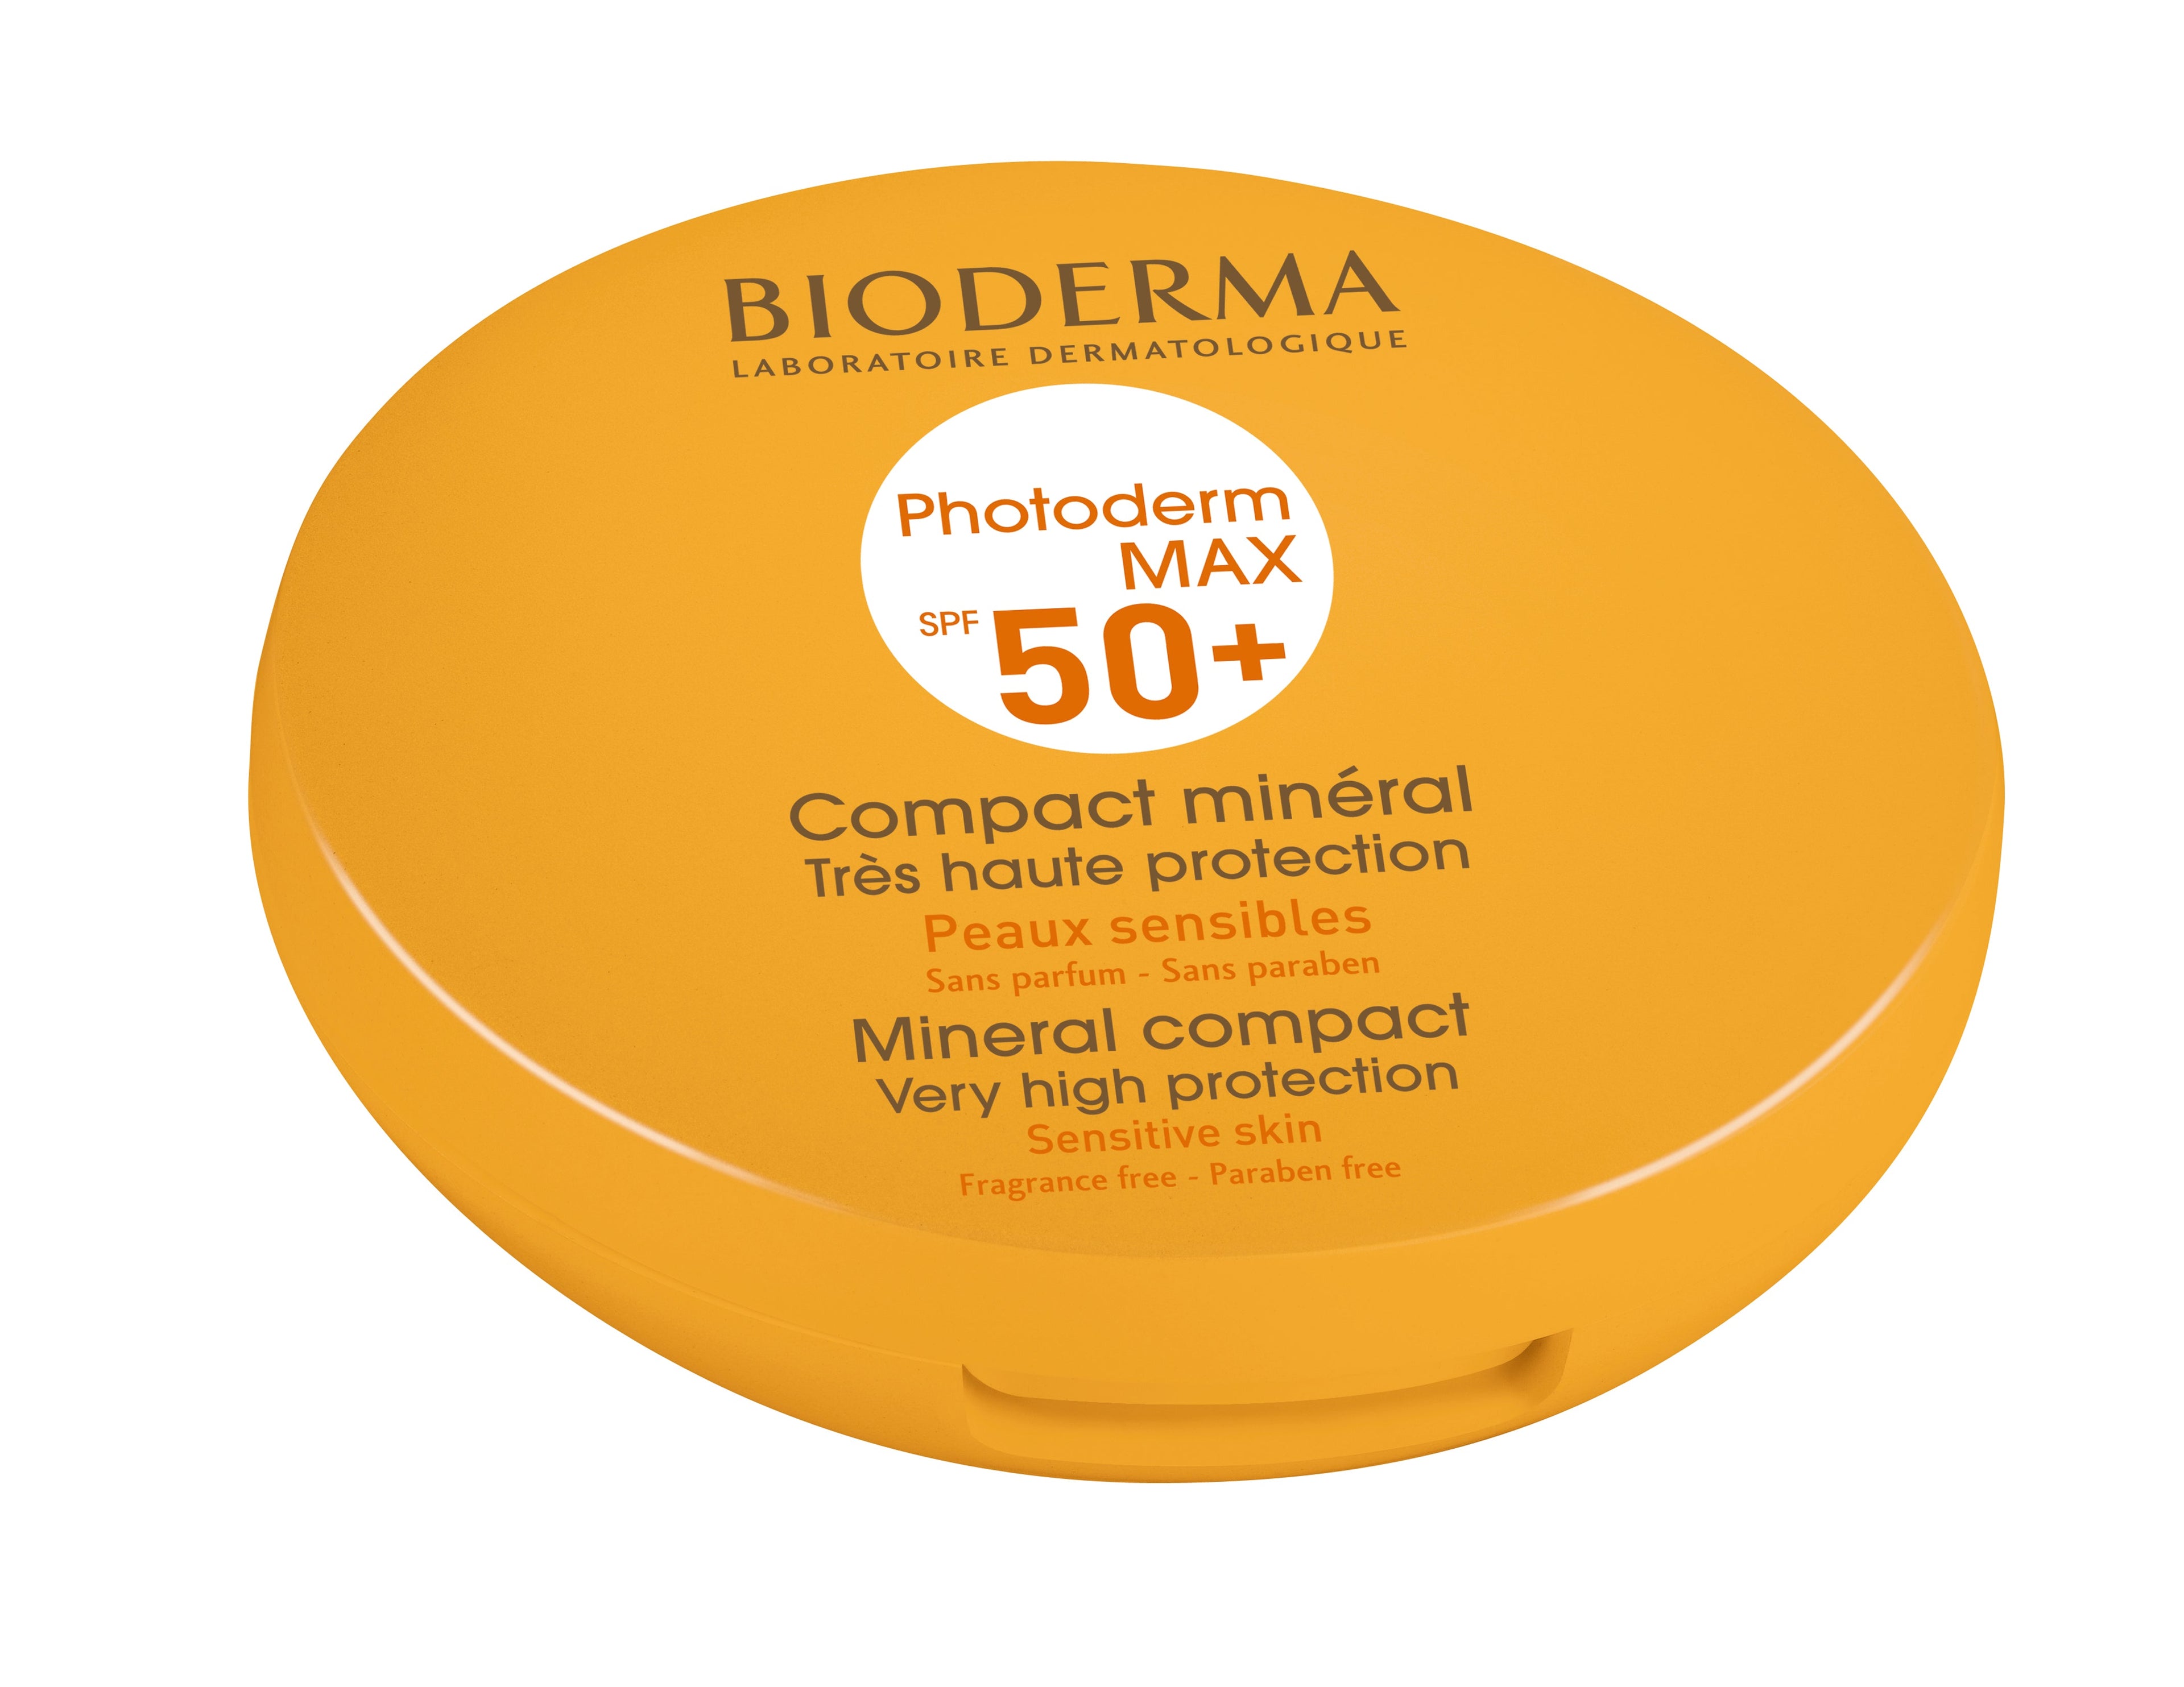 Bioderma Photoderm MAX Mineral Compact SPF50+ Dark Tint for Allergic Skin, 10g